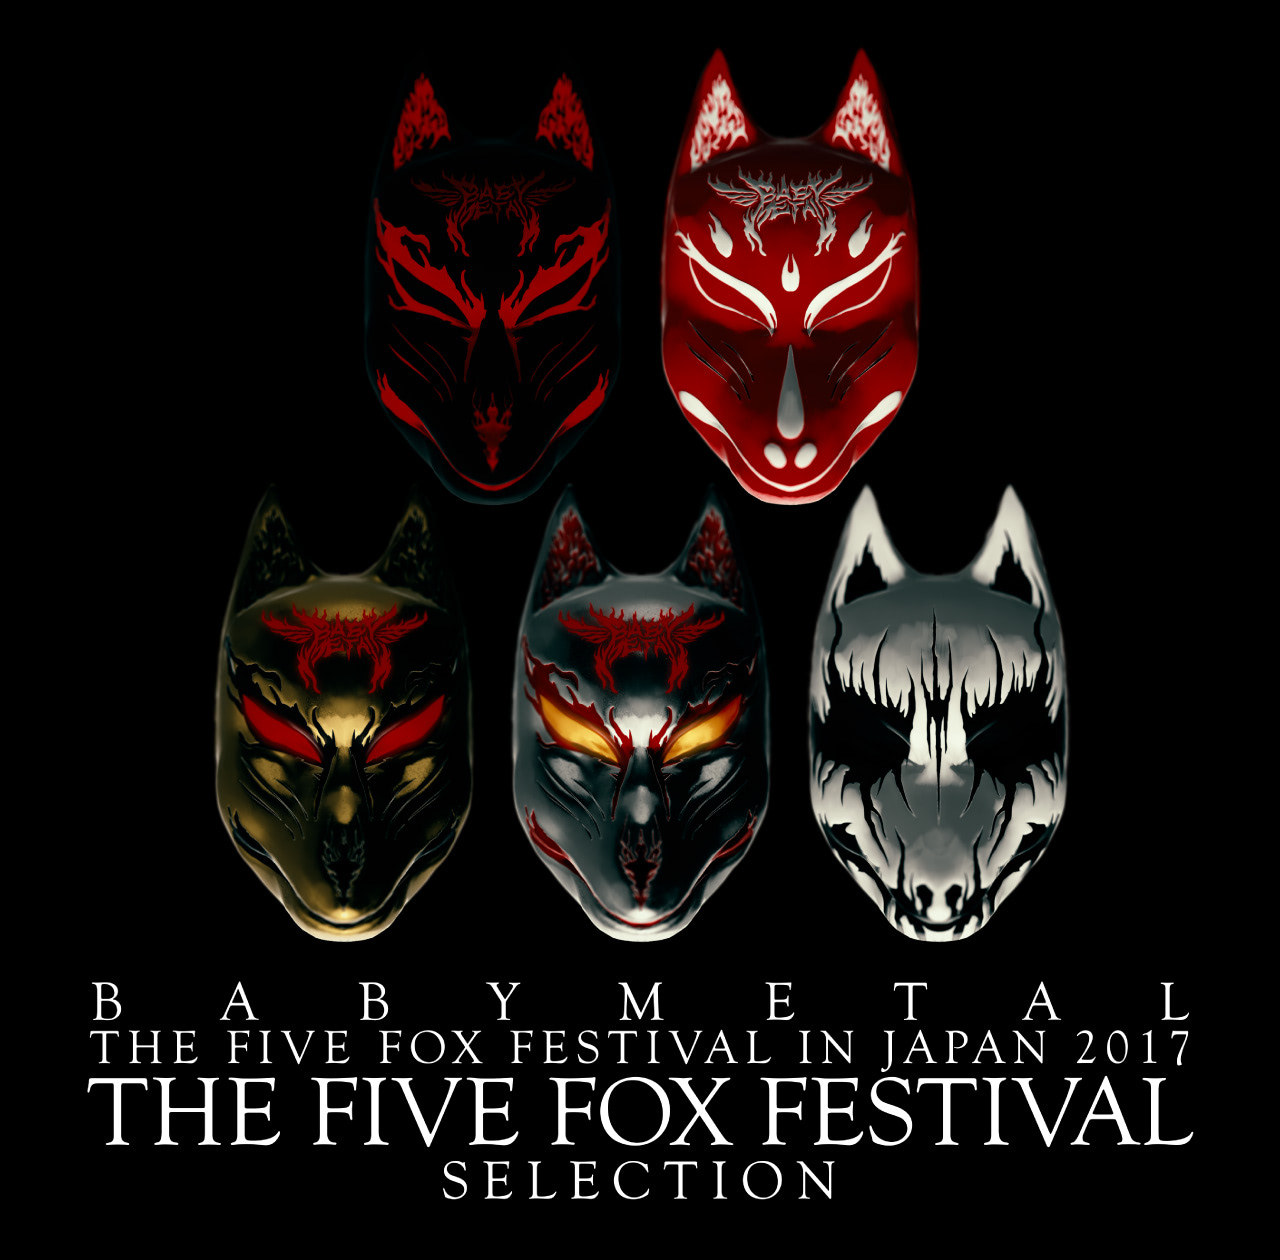 THE FOX FESTIVALS IN JAPAN 2017 - THE FIVE FOX FESTIVAL